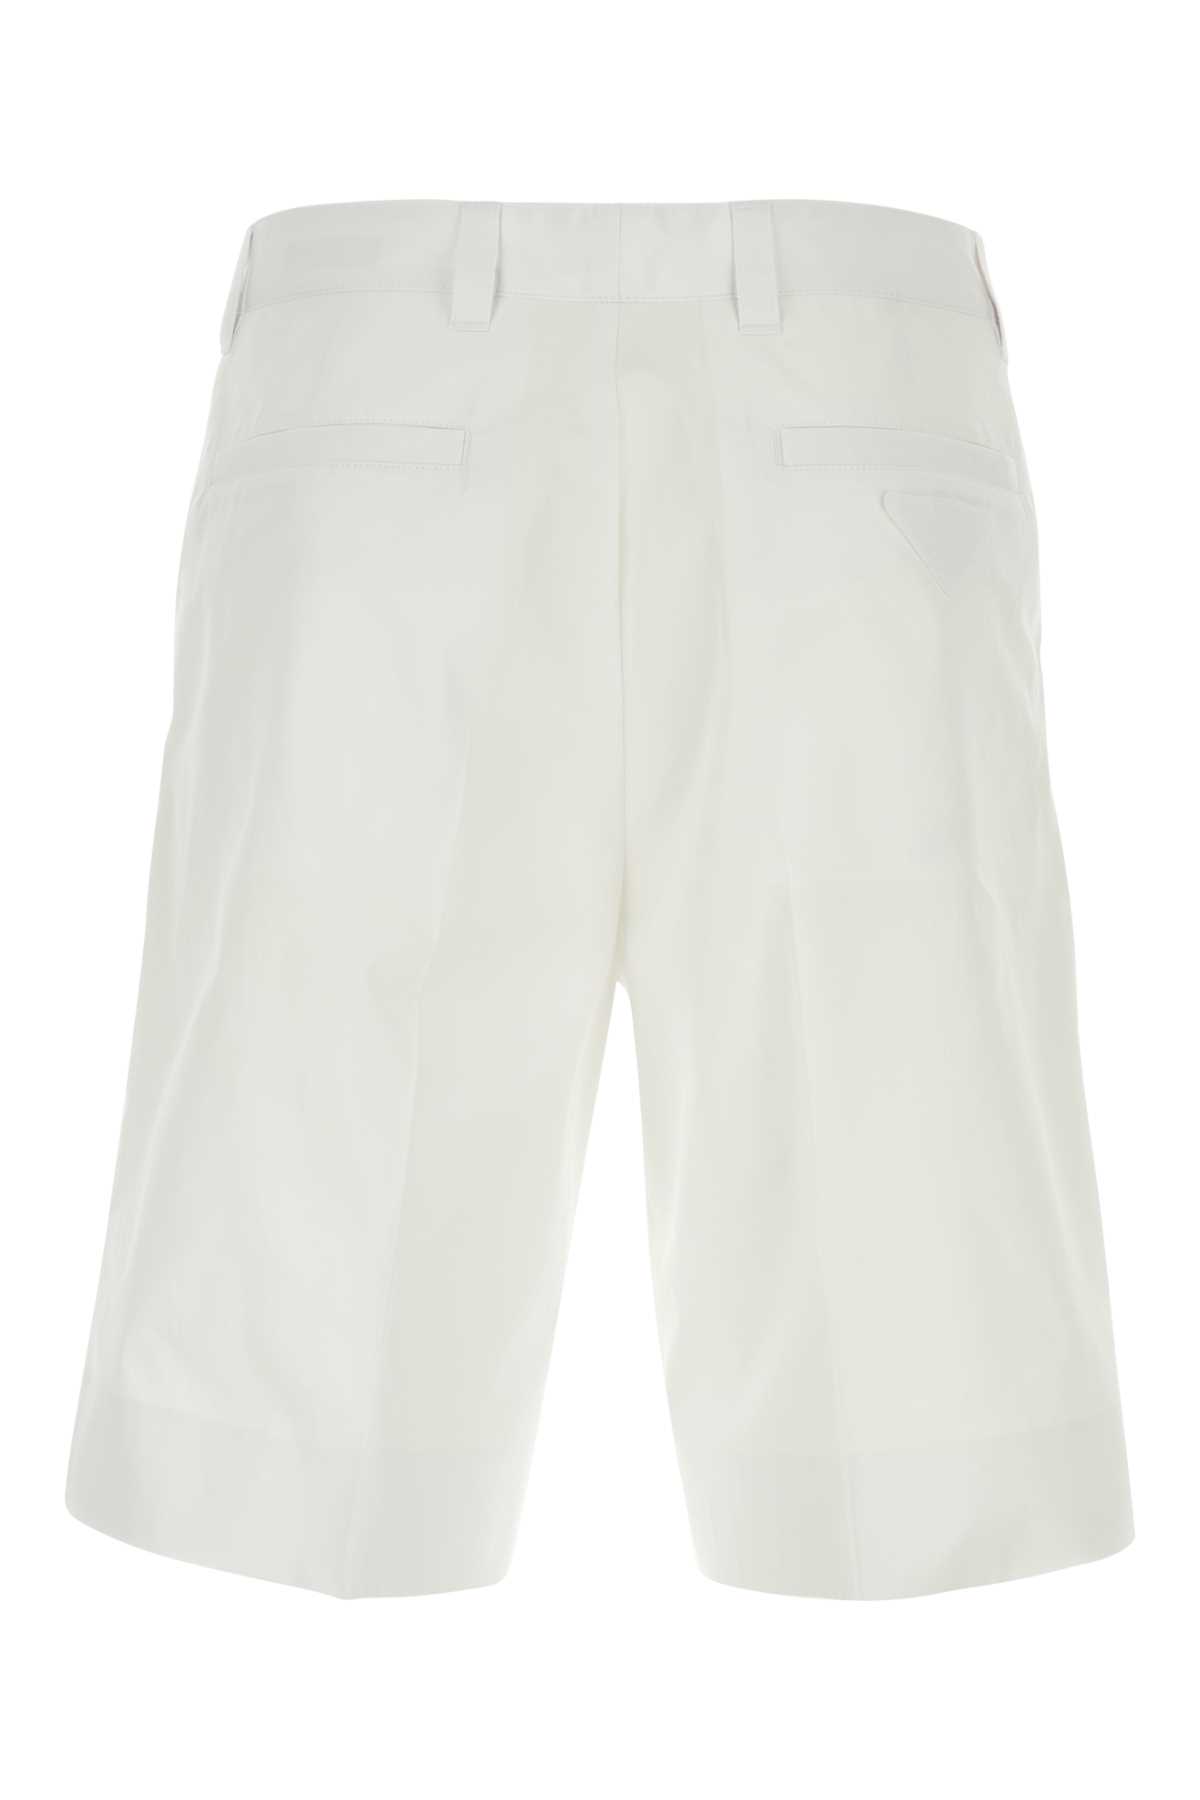 Prada White Cotton Bermuda Shorts In Bianco